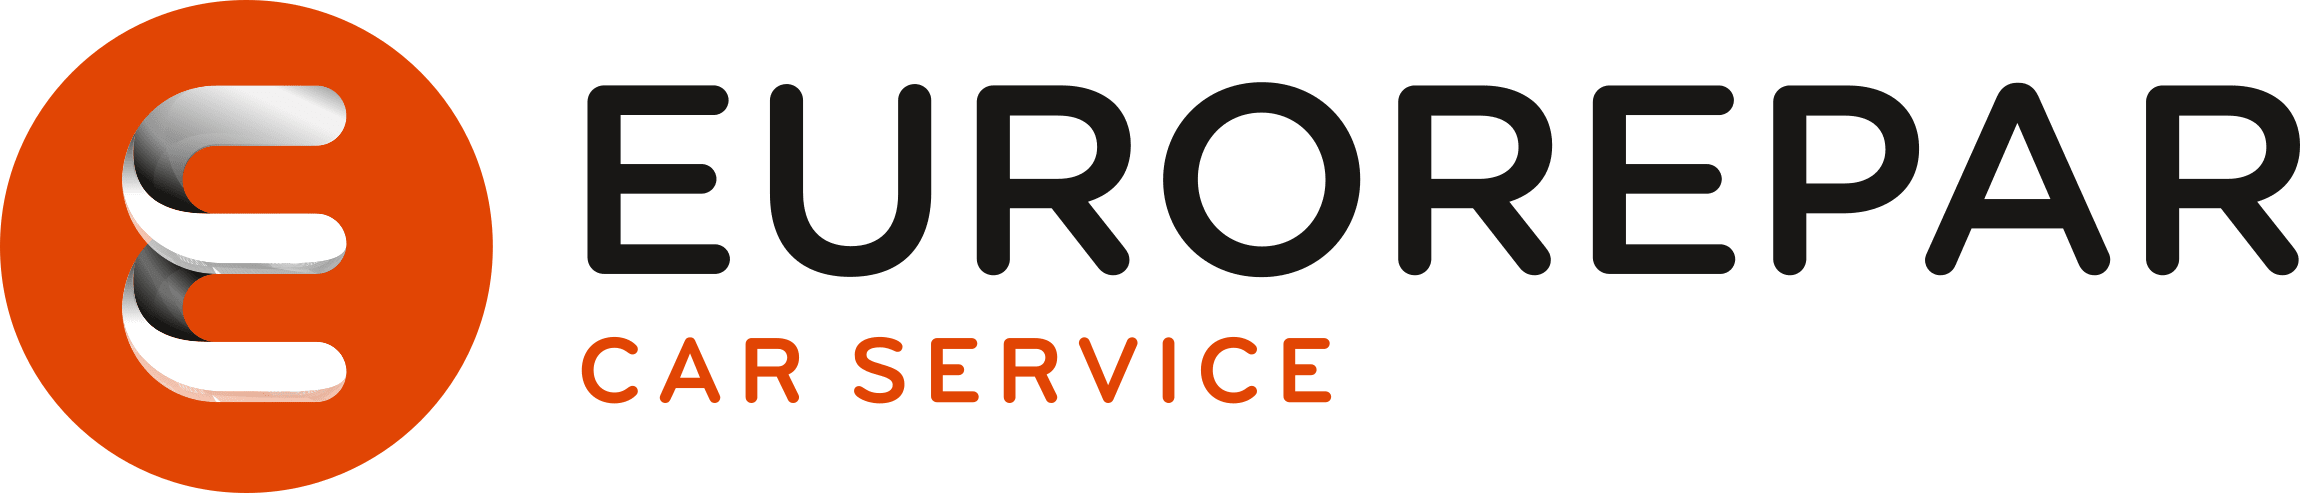 Euro Repar - Garage Goncalves logo